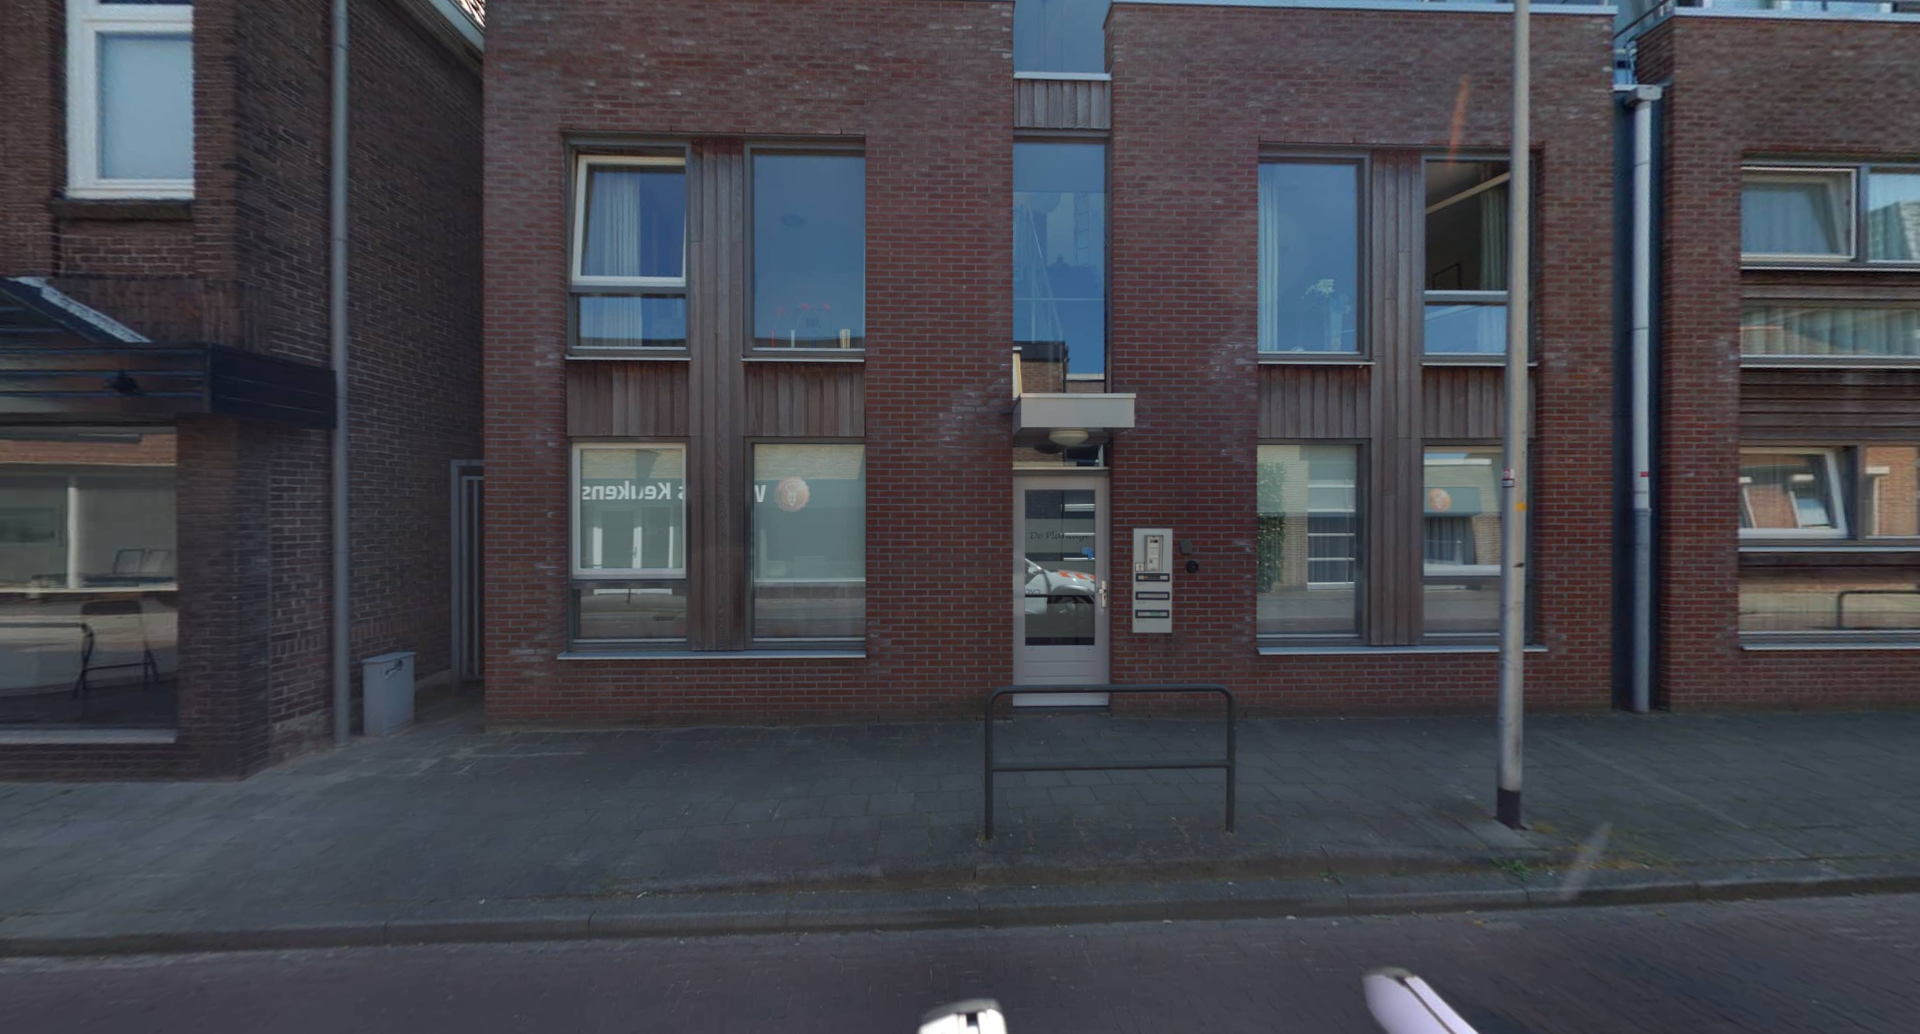 Gasthuisstraat 26, 7101 DV Winterswijk, Nederland